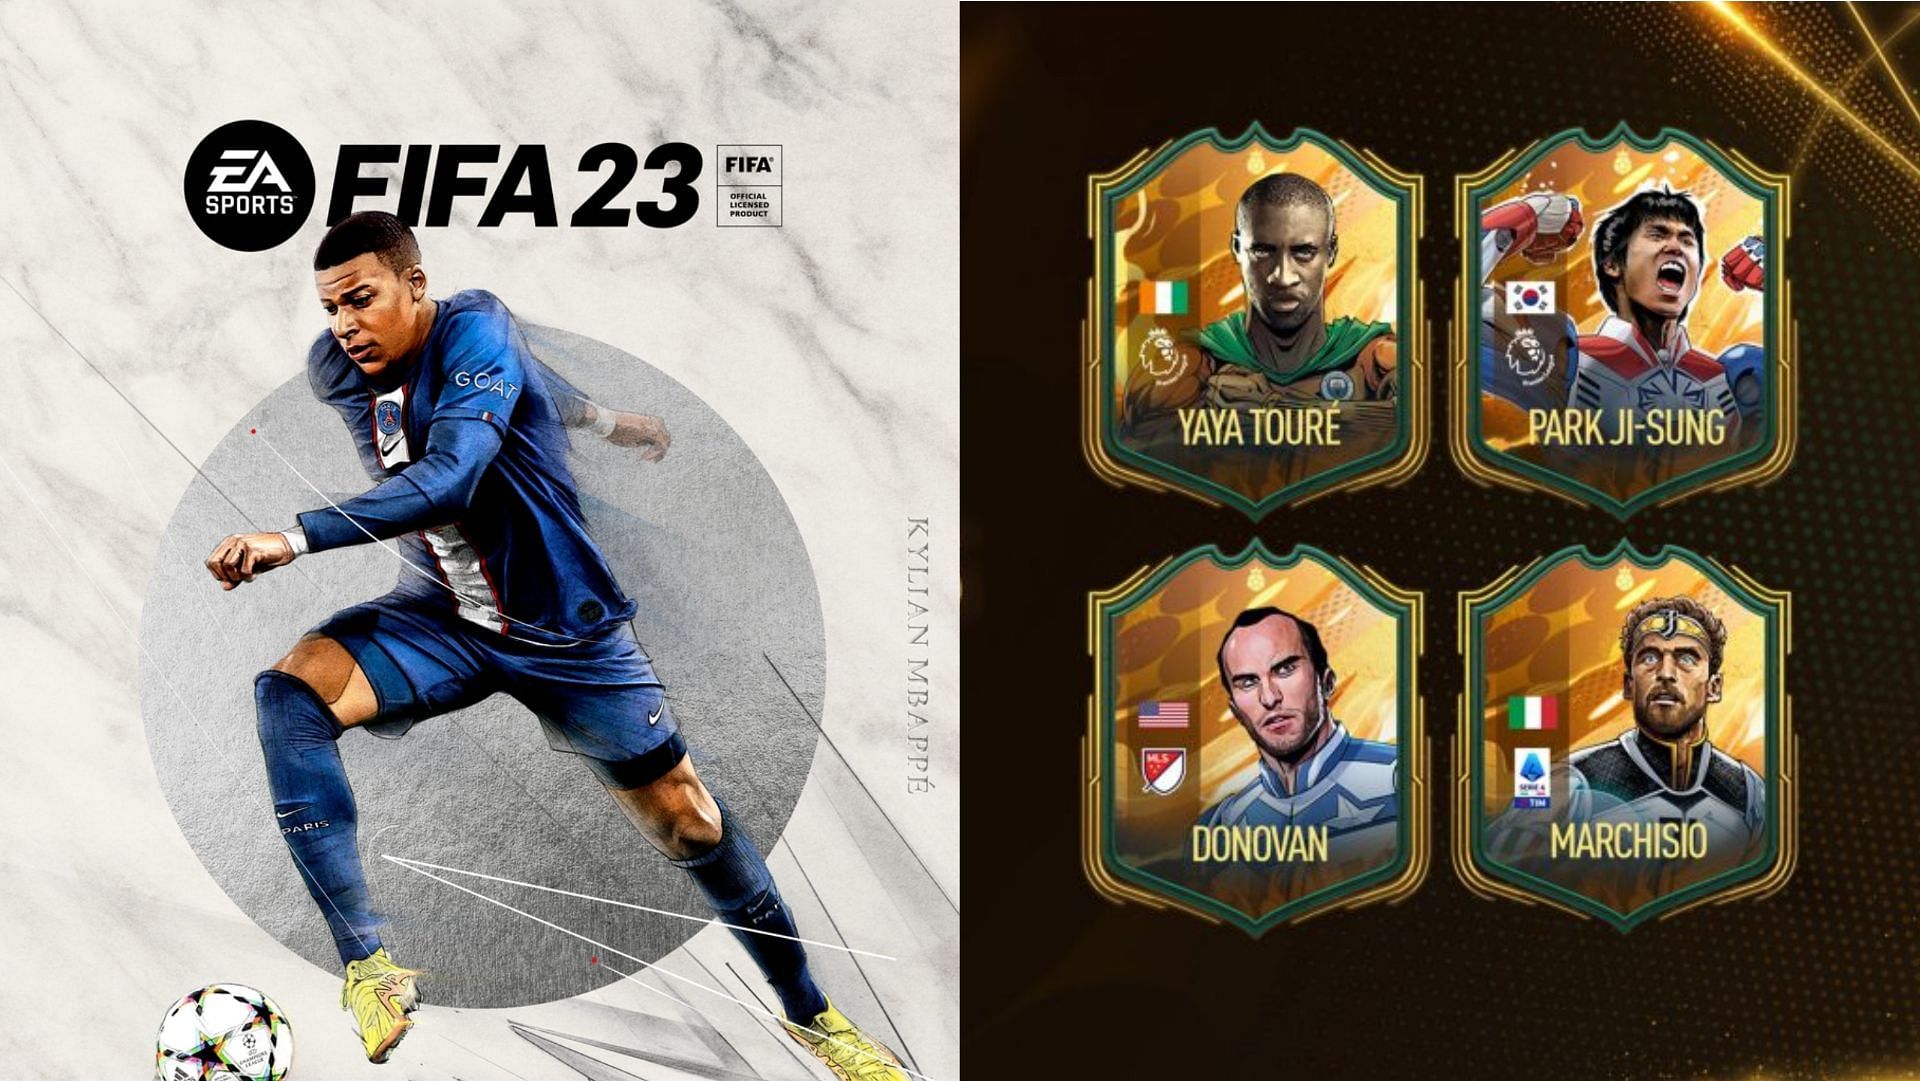 Buy FIFA 23 - Pre-order Bonus EUROPE Origin PC Key 